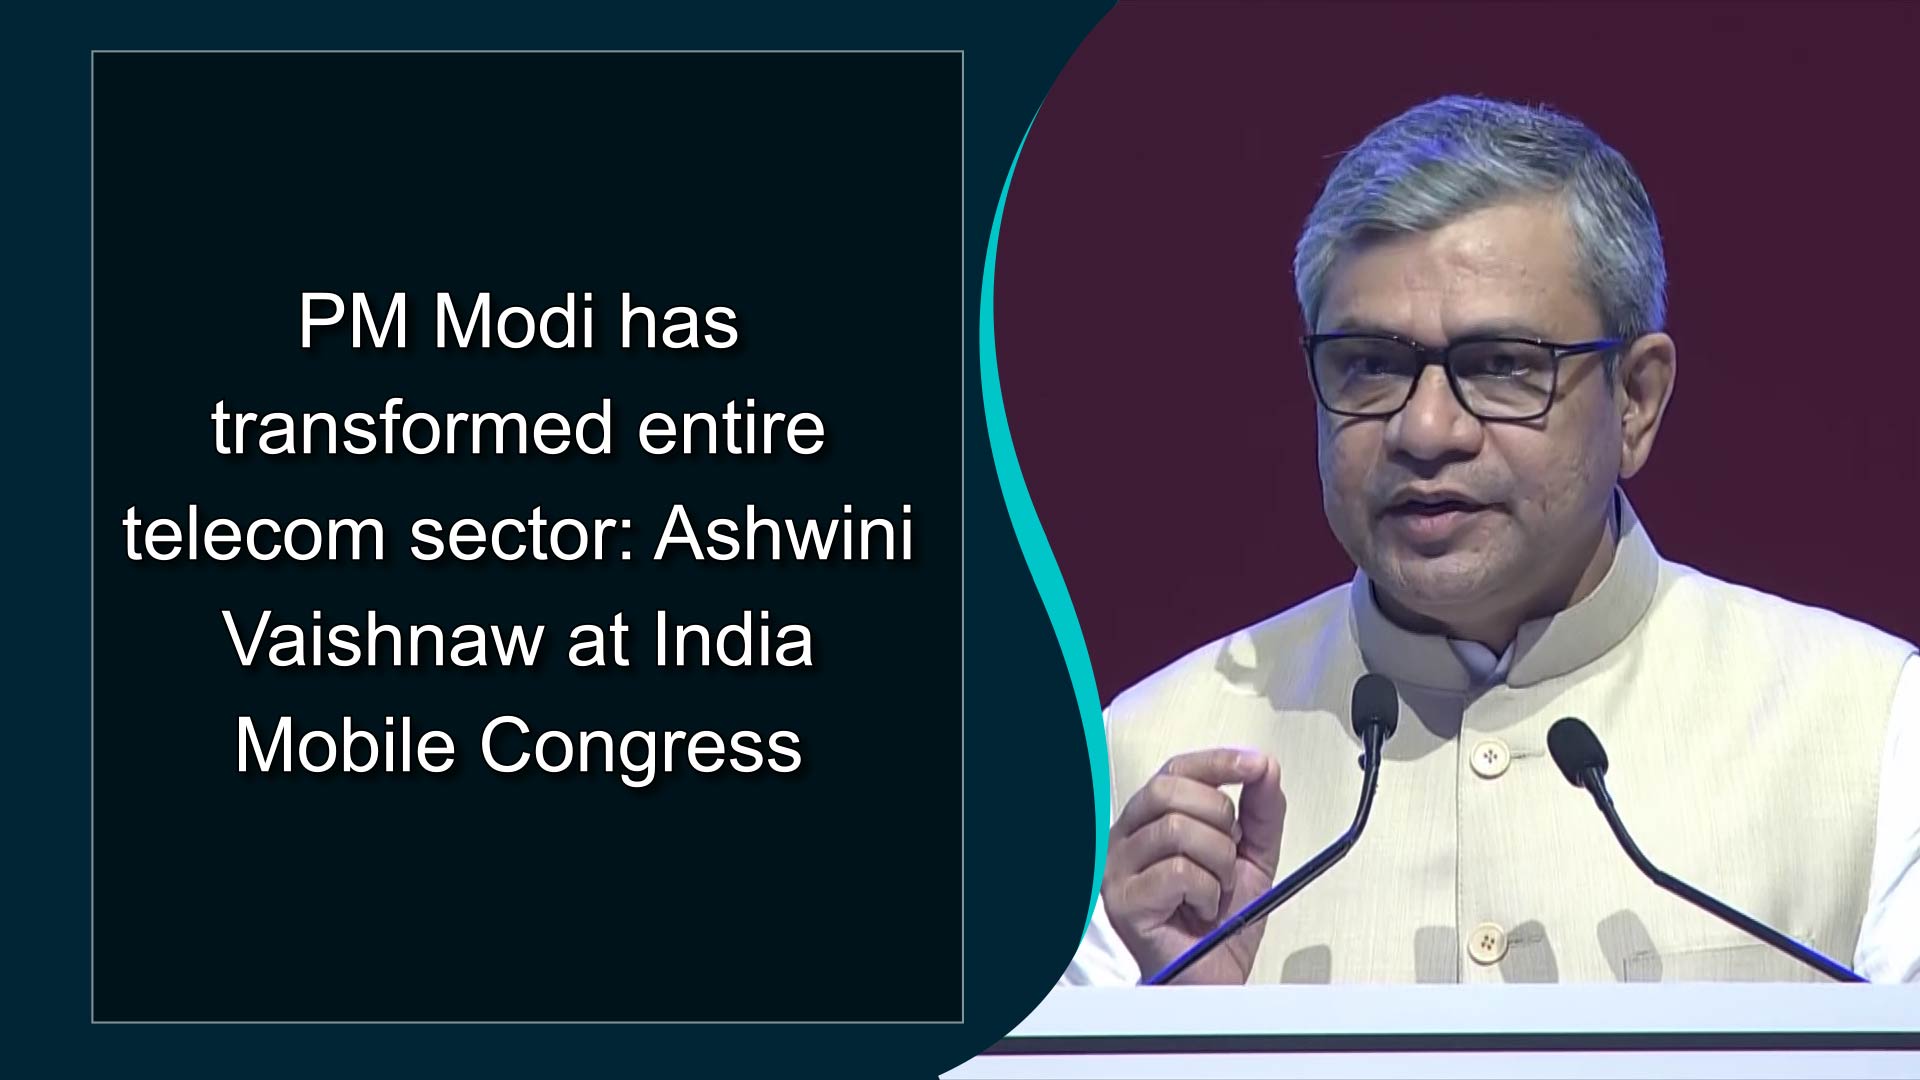 PM Narendra Modi has transformed entire telecom sector: Ashwini Vaishnaw at India Mobile Congress